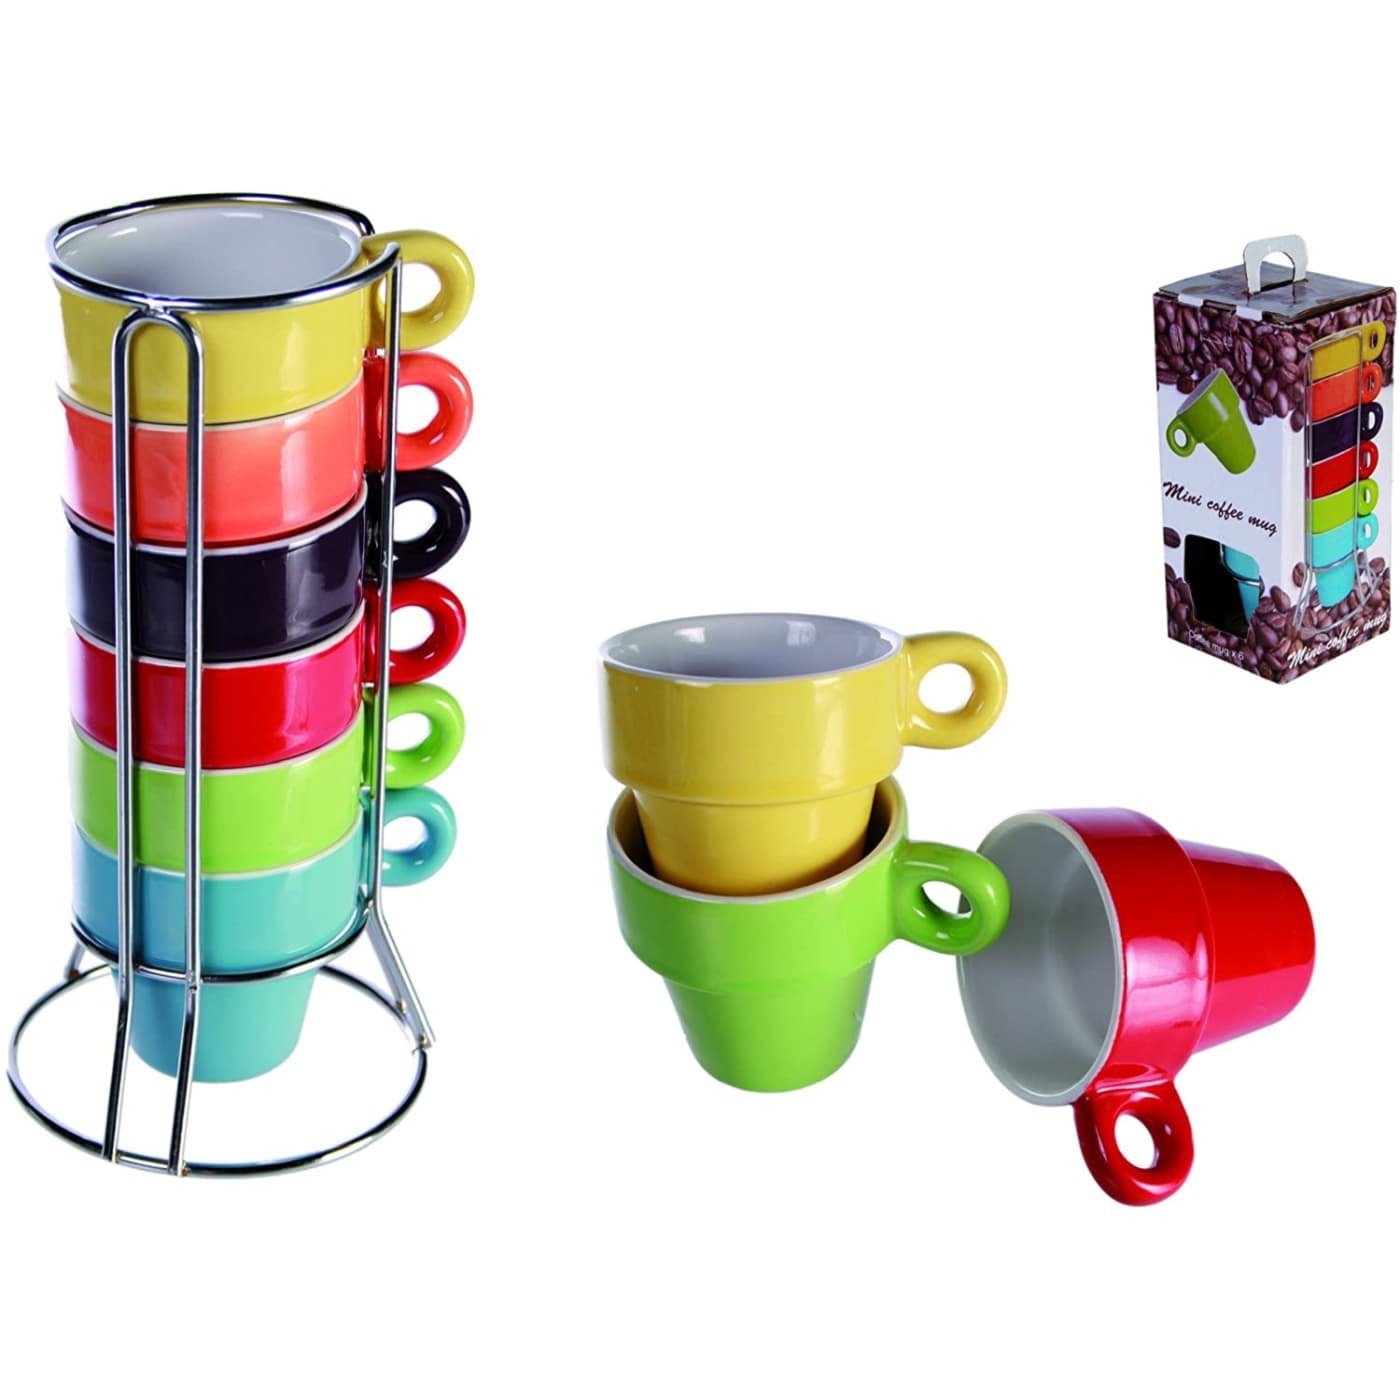 ReWu Espressotasse OOTB Espressotasse, 6-farbig sortiertes Set auf  Chromständer